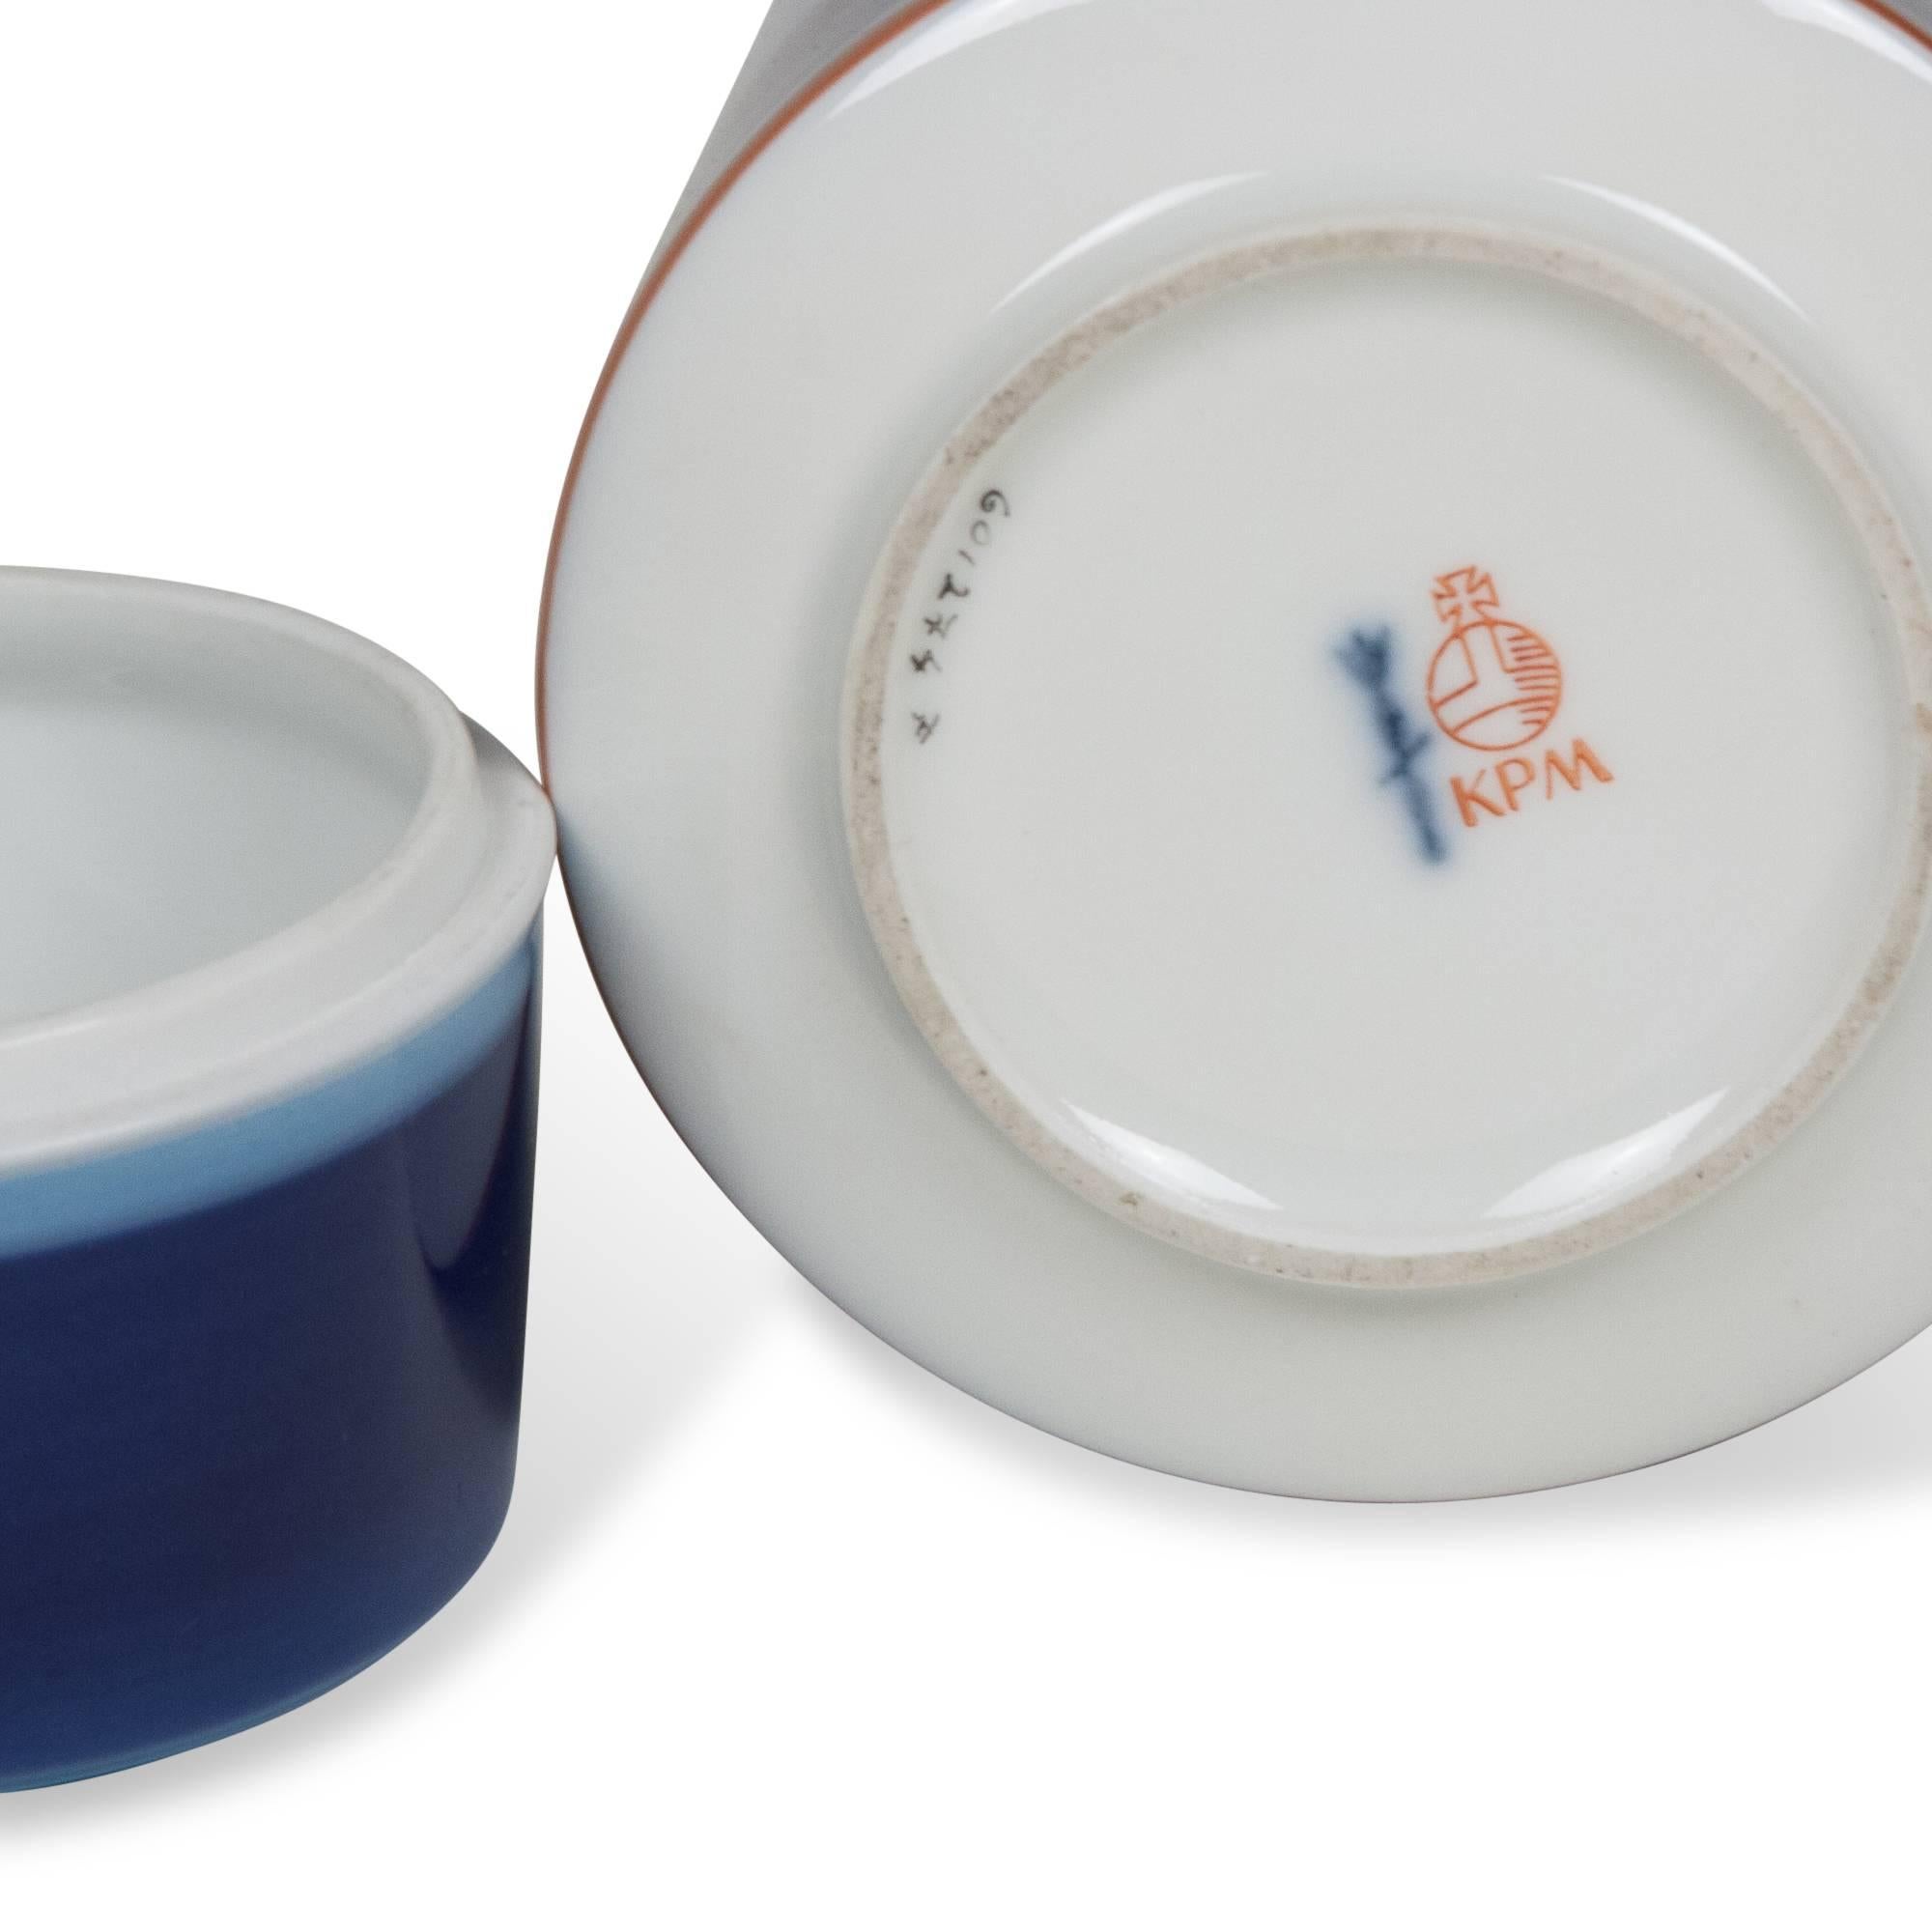 Two Cobalt and Blue Porcelain Pieces by KPM, German, 1950s 1